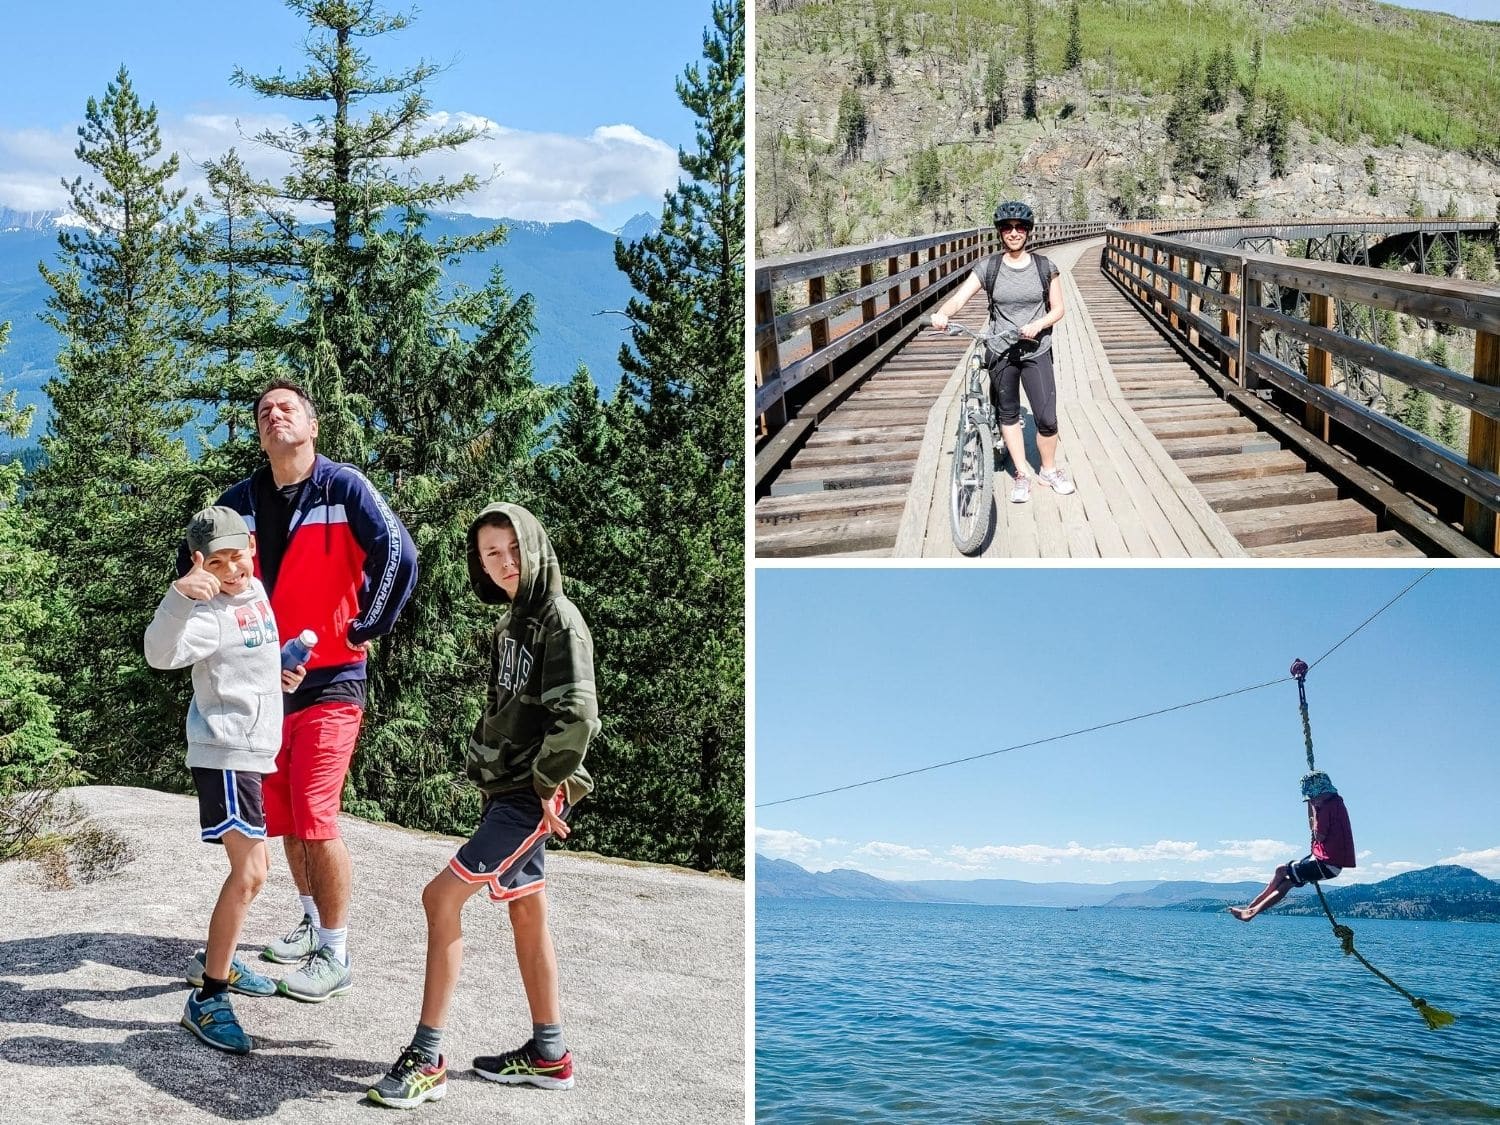 Collage of photos showing hiking, biking and ziplining on the lake.